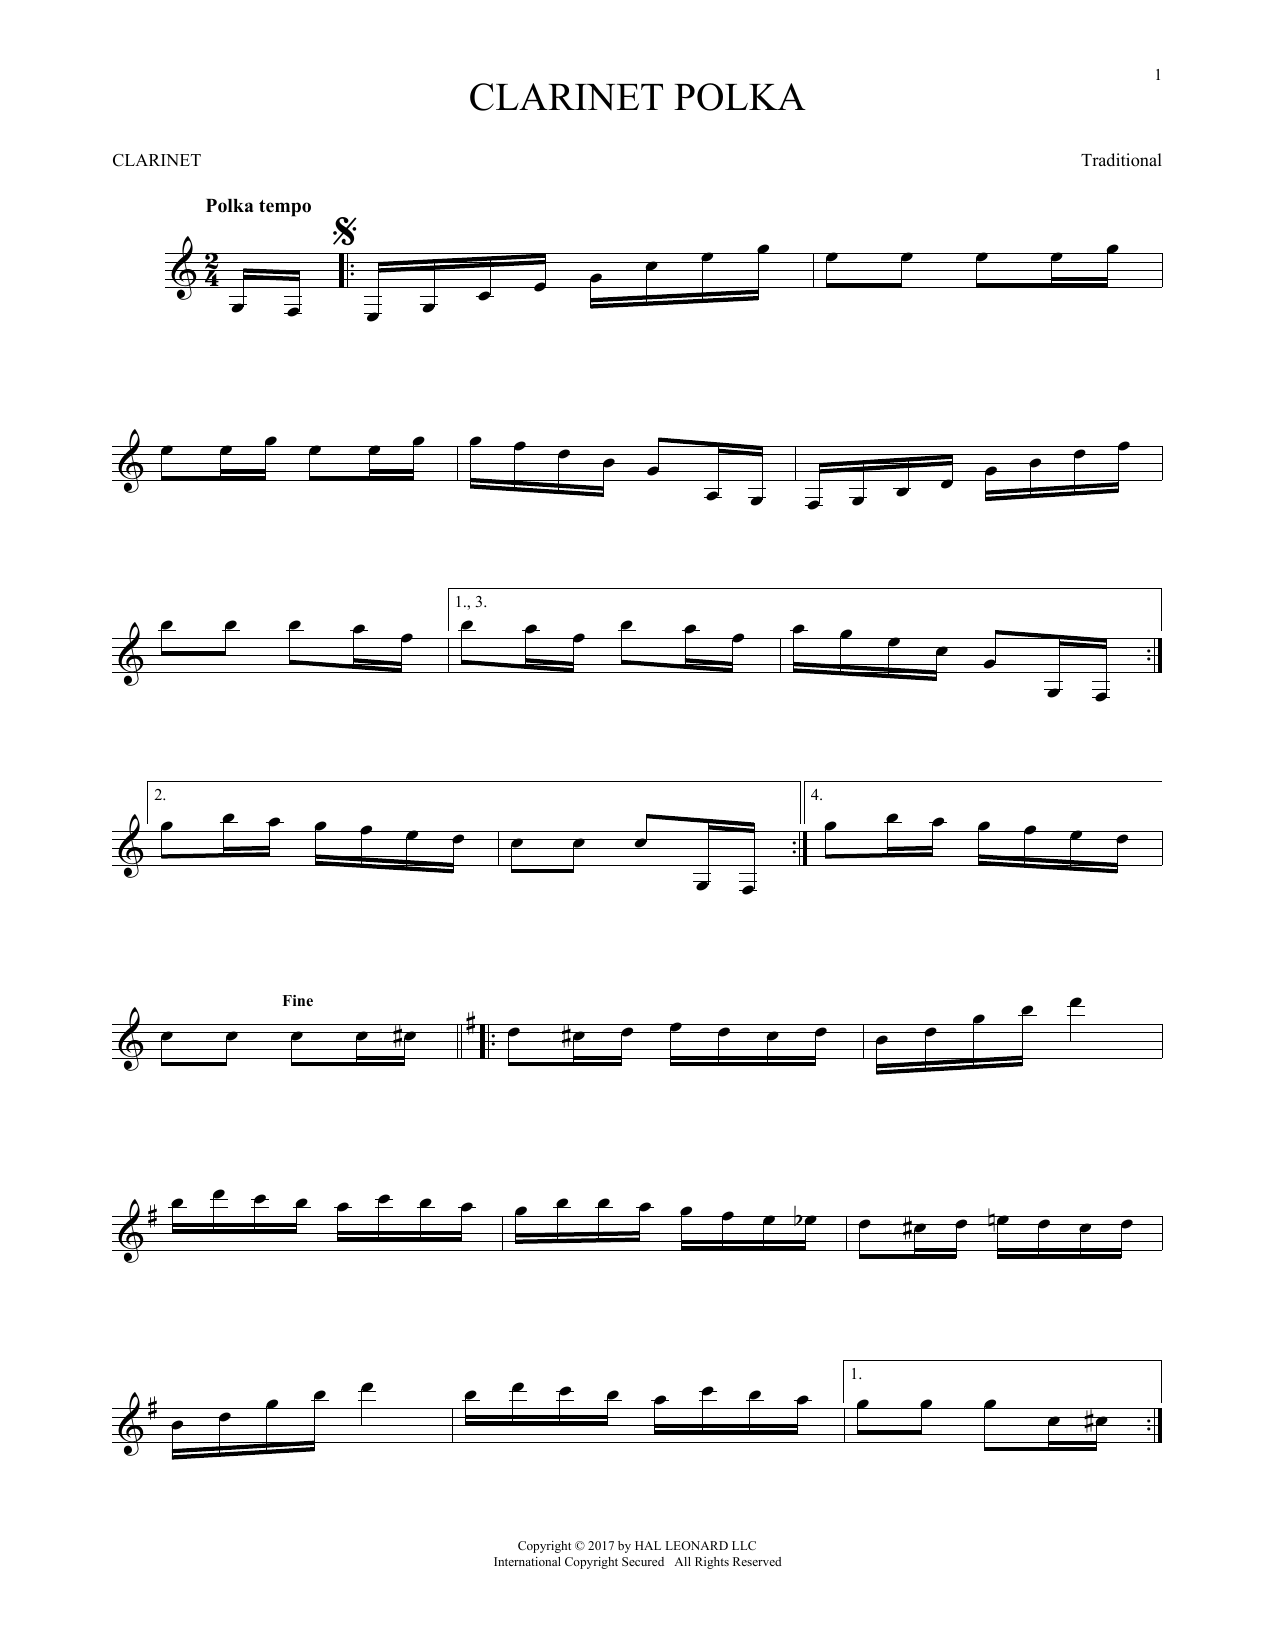 Download Traditional Clarinet Polka Sheet Music